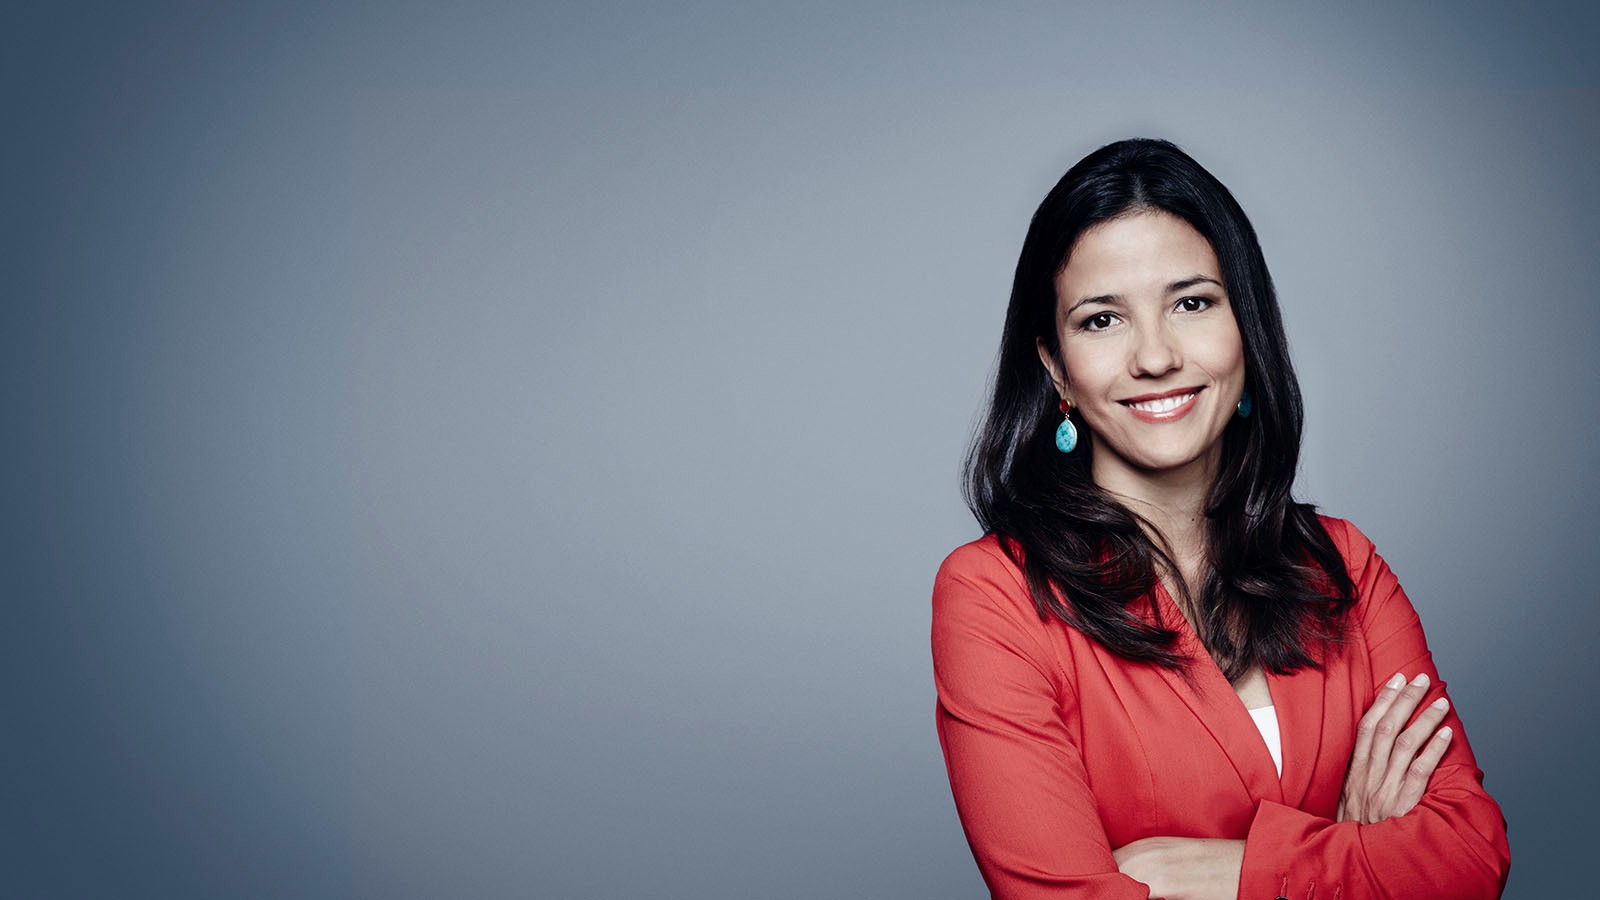 CNN Profiles - Isa Soares - Anchor and Correspondent - CNN